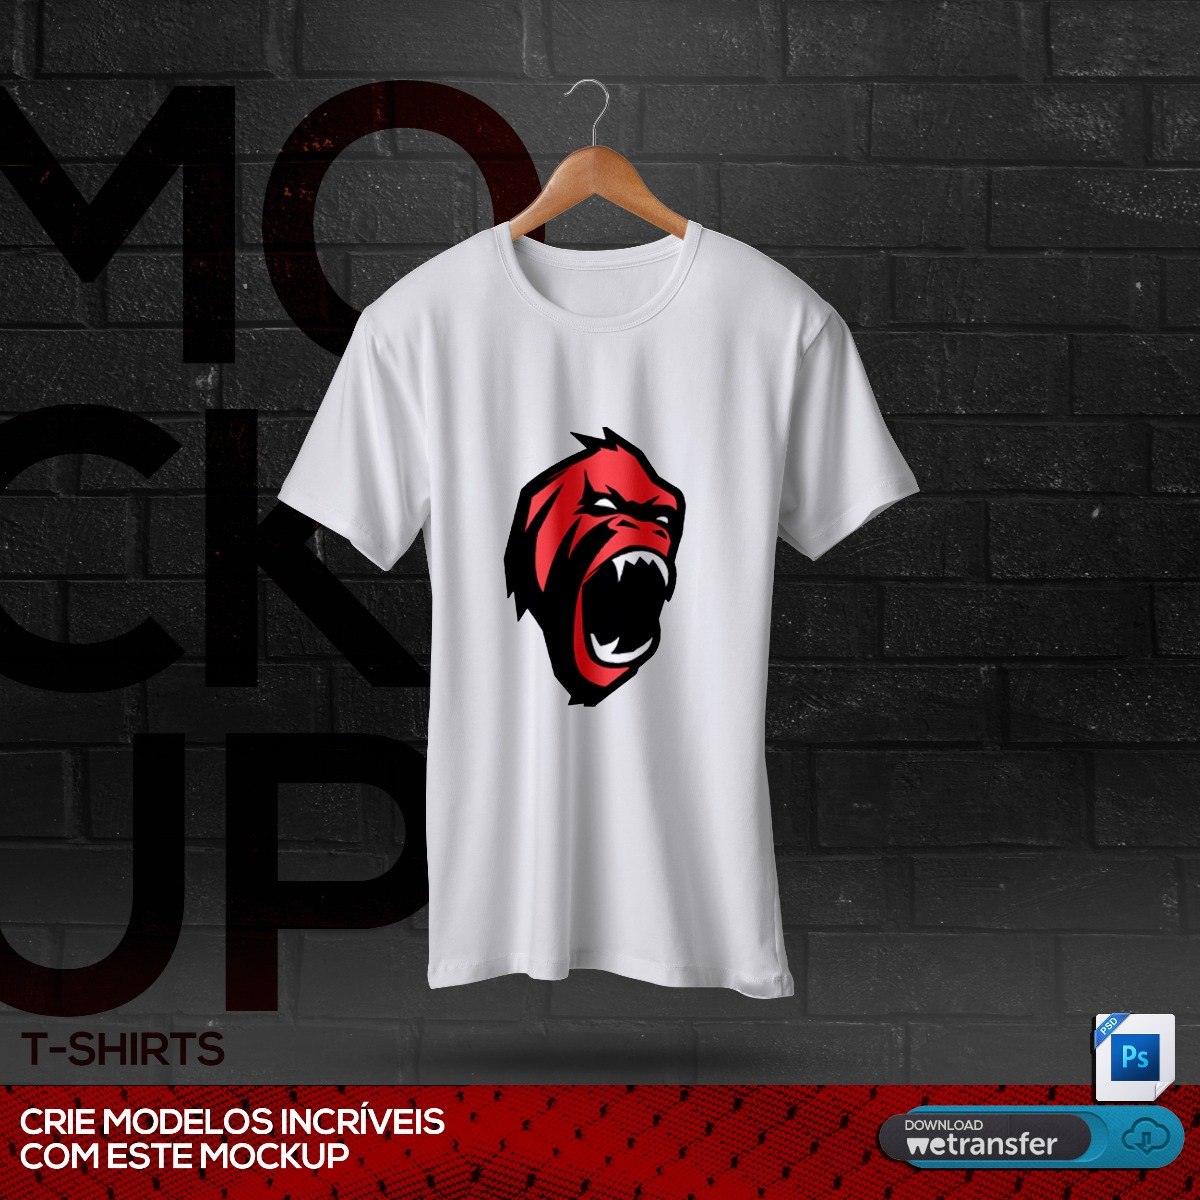 Download Mockup Camisa - Tshirt Mockup - R$ 19,99 em Mercado Livre